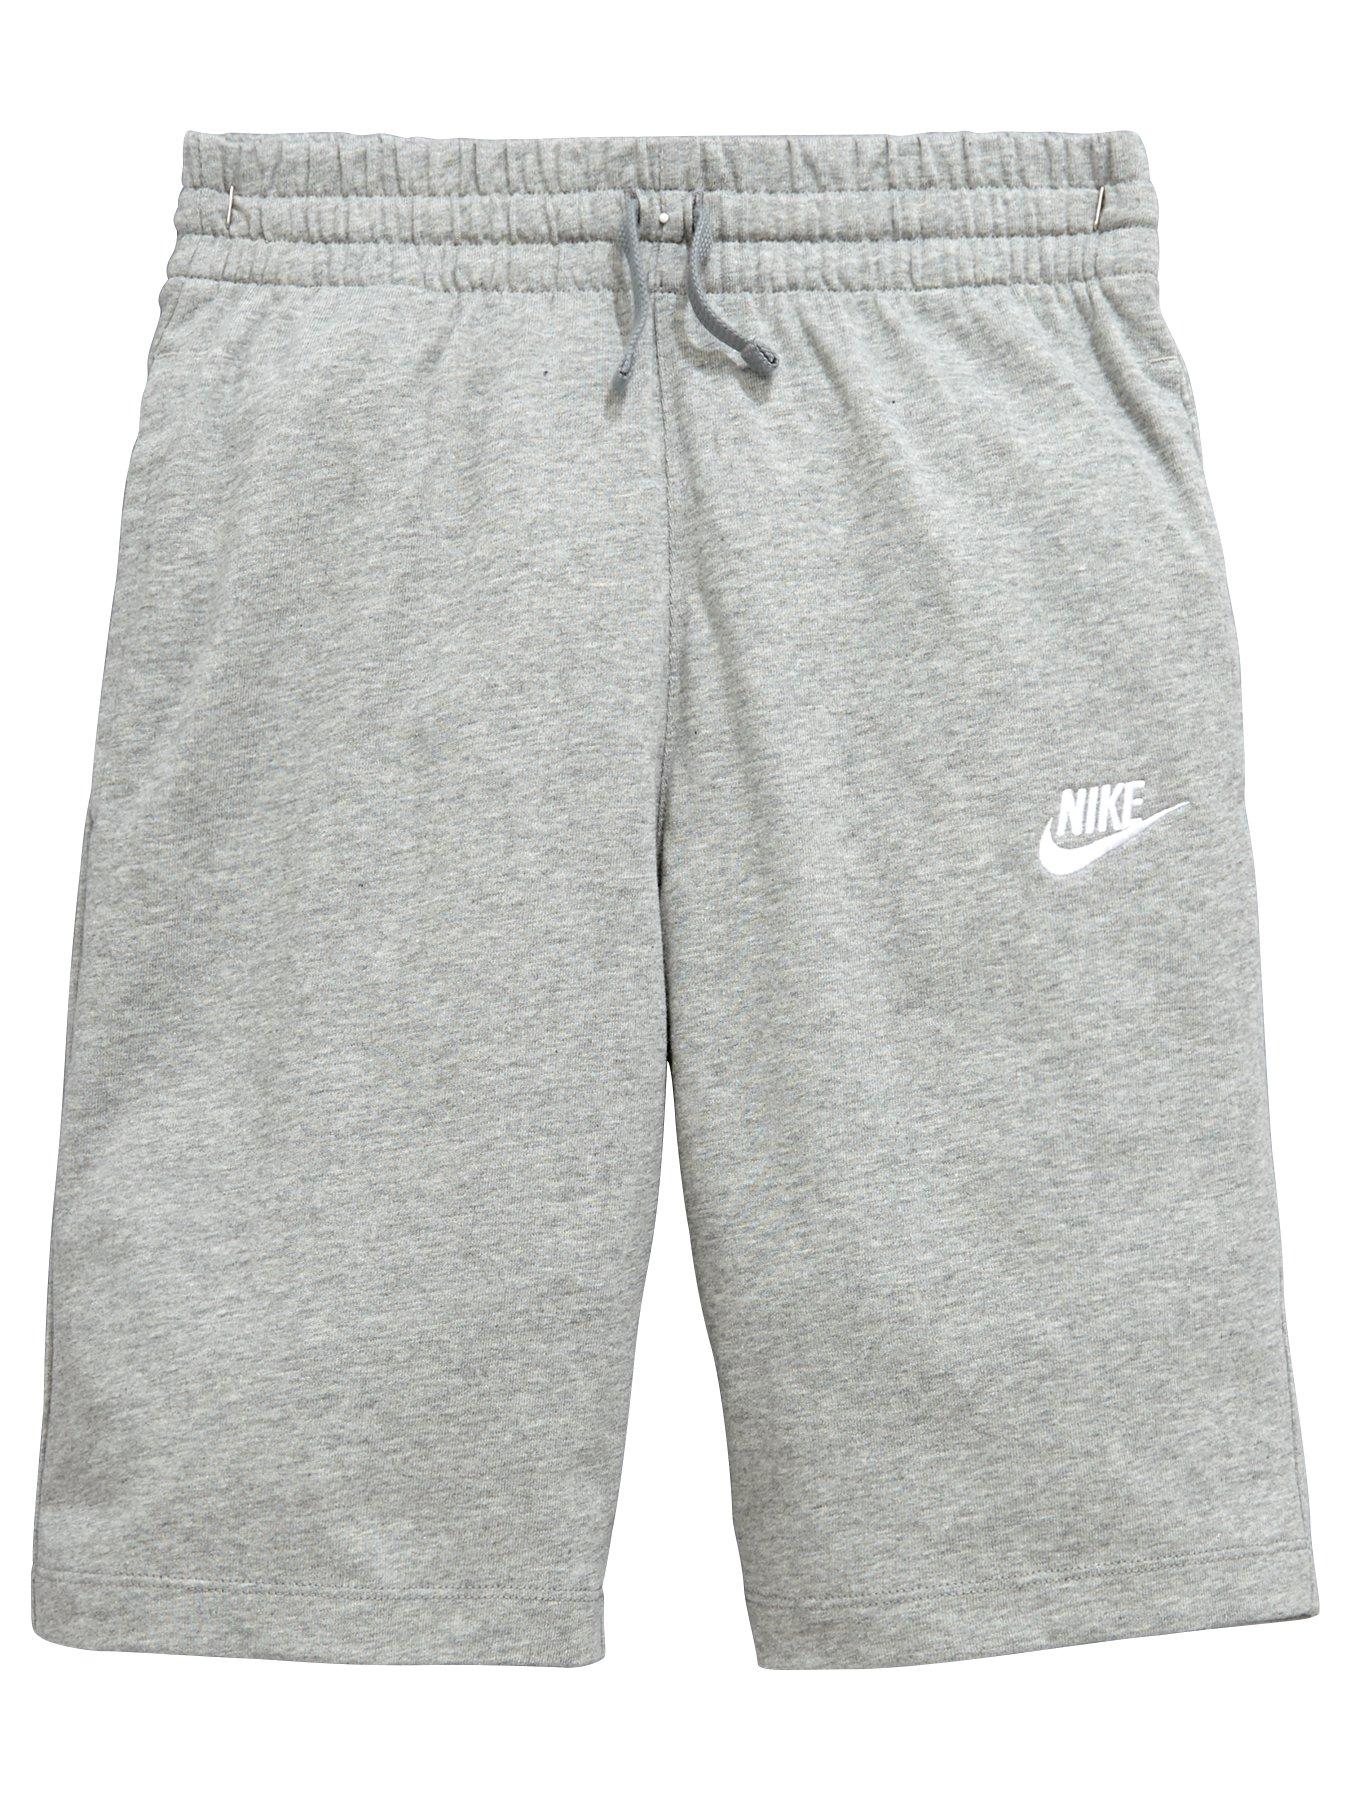 Nike Older Boys Jersey Shorts - Grey 